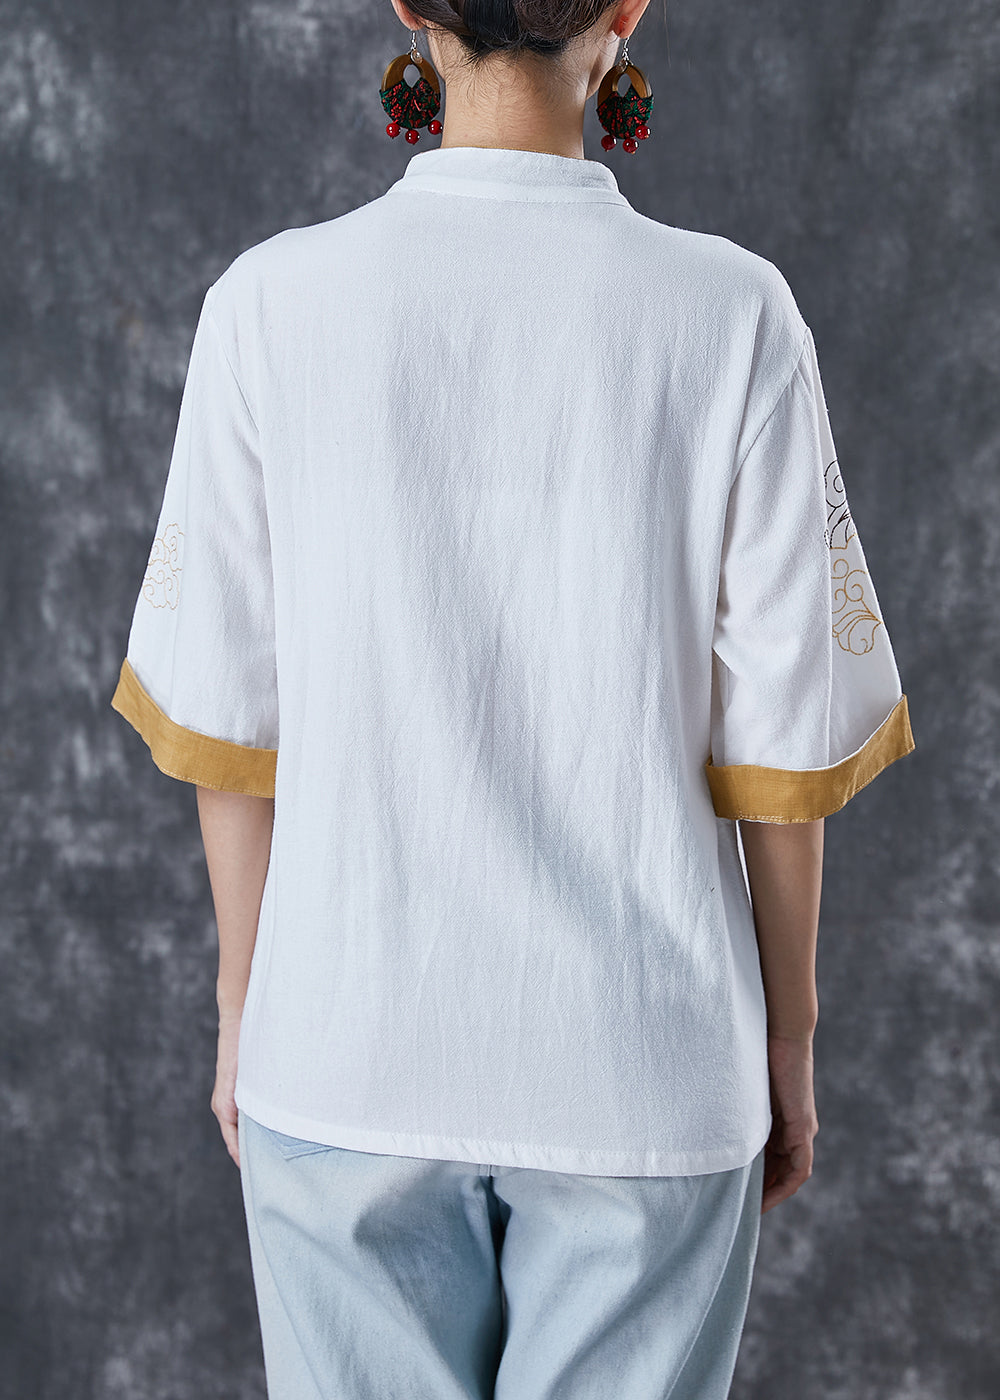 Italian White Embroideried Linen Blouse Tops Short Sleeve